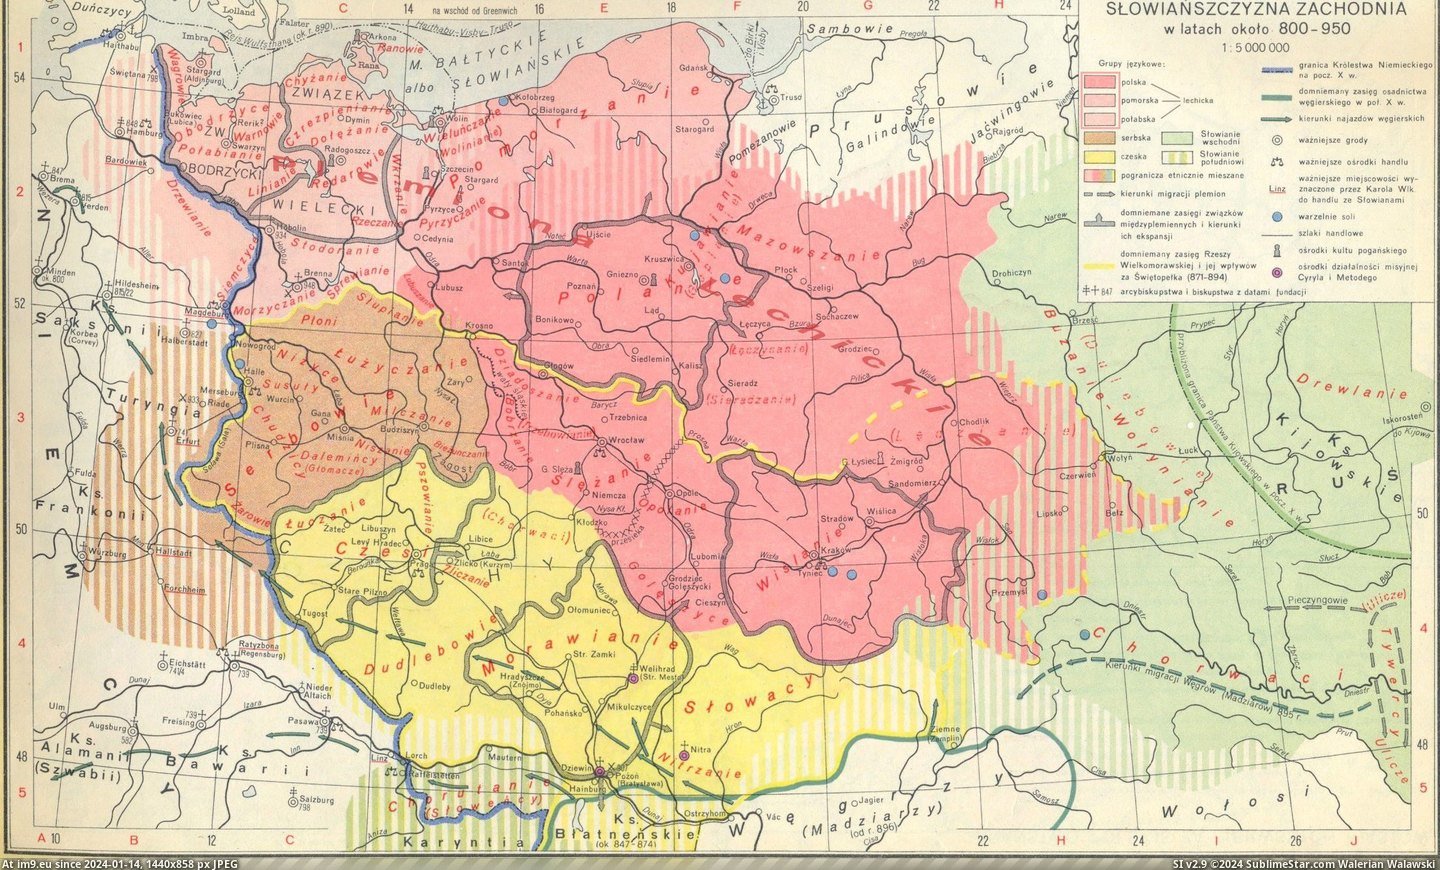 #West #Slavic #2208x1328 #Tribes [Mapporn] West Slavic tribes about 800-950 AD [2208x1328] Pic. (Bild von album My r/MAPS favs))